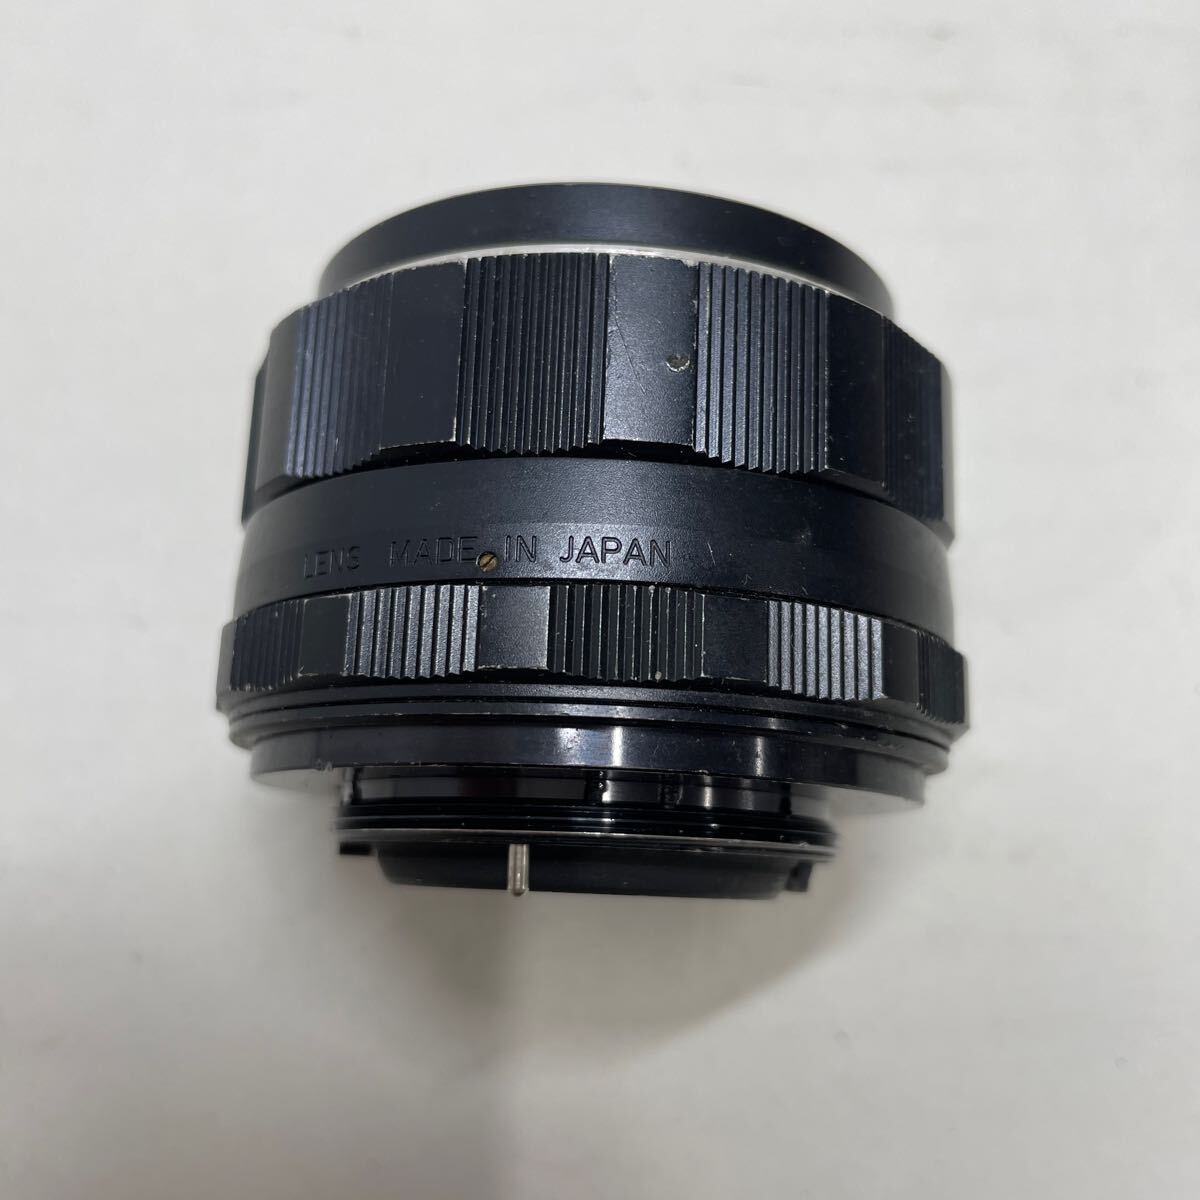  Junk / returned goods un- possible lens ASAHI Super-Multi-Coated TAKUMAR F1.4 50mm #i53159 j9